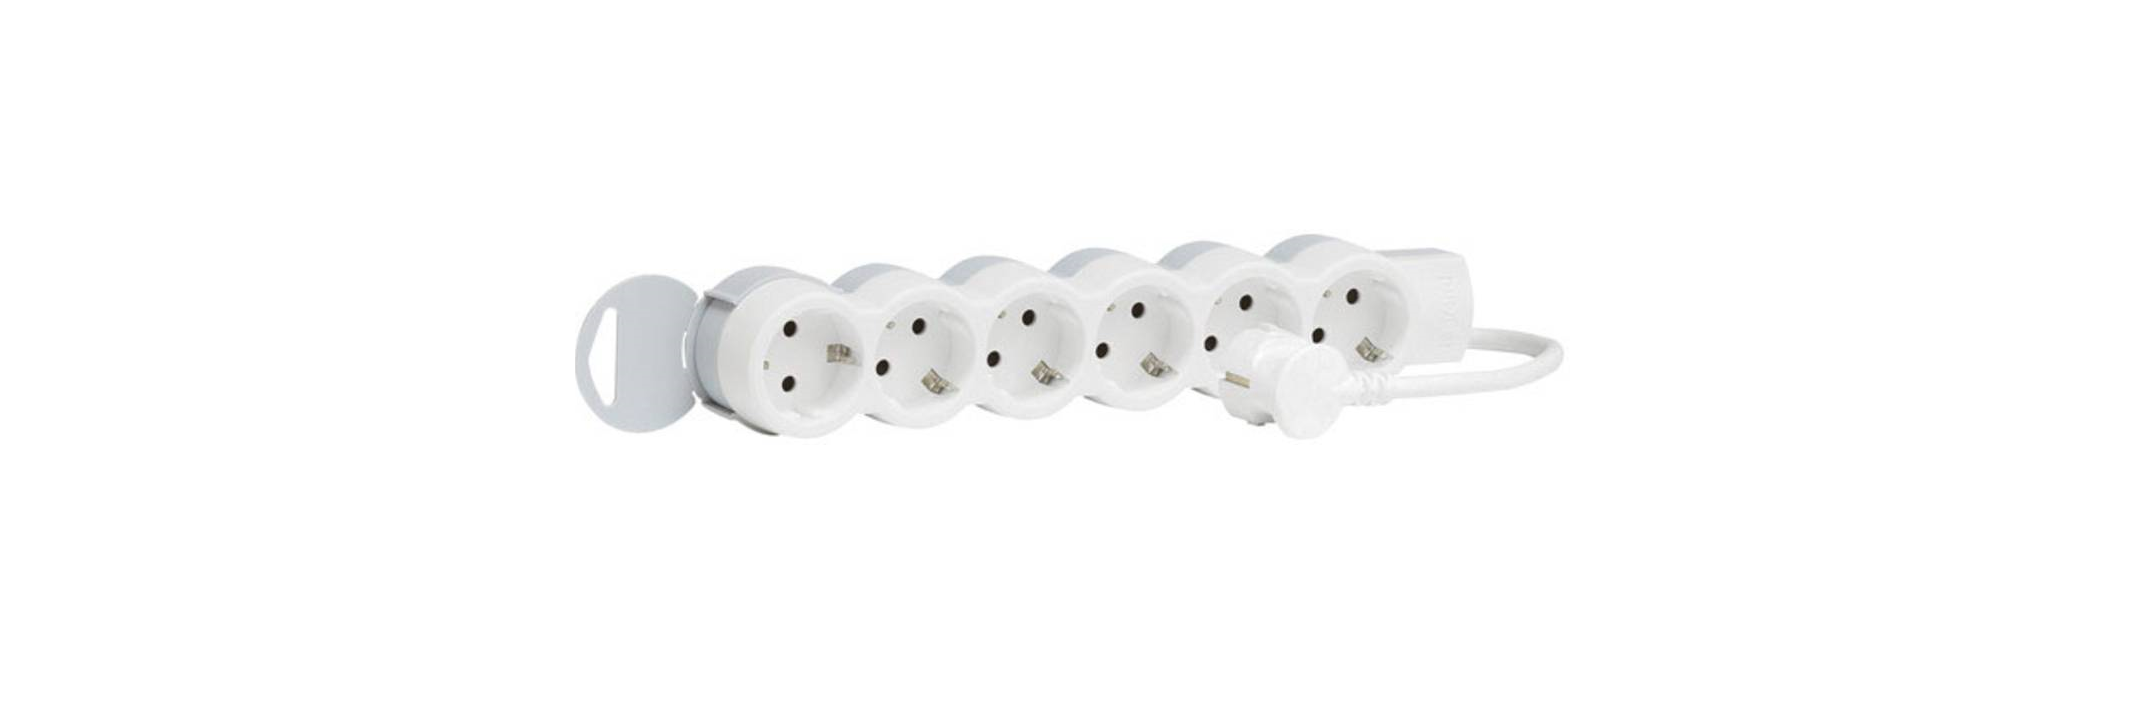 Multi-outlet extension- 6 Sockets - 6x2p E 220v - 3m Cord